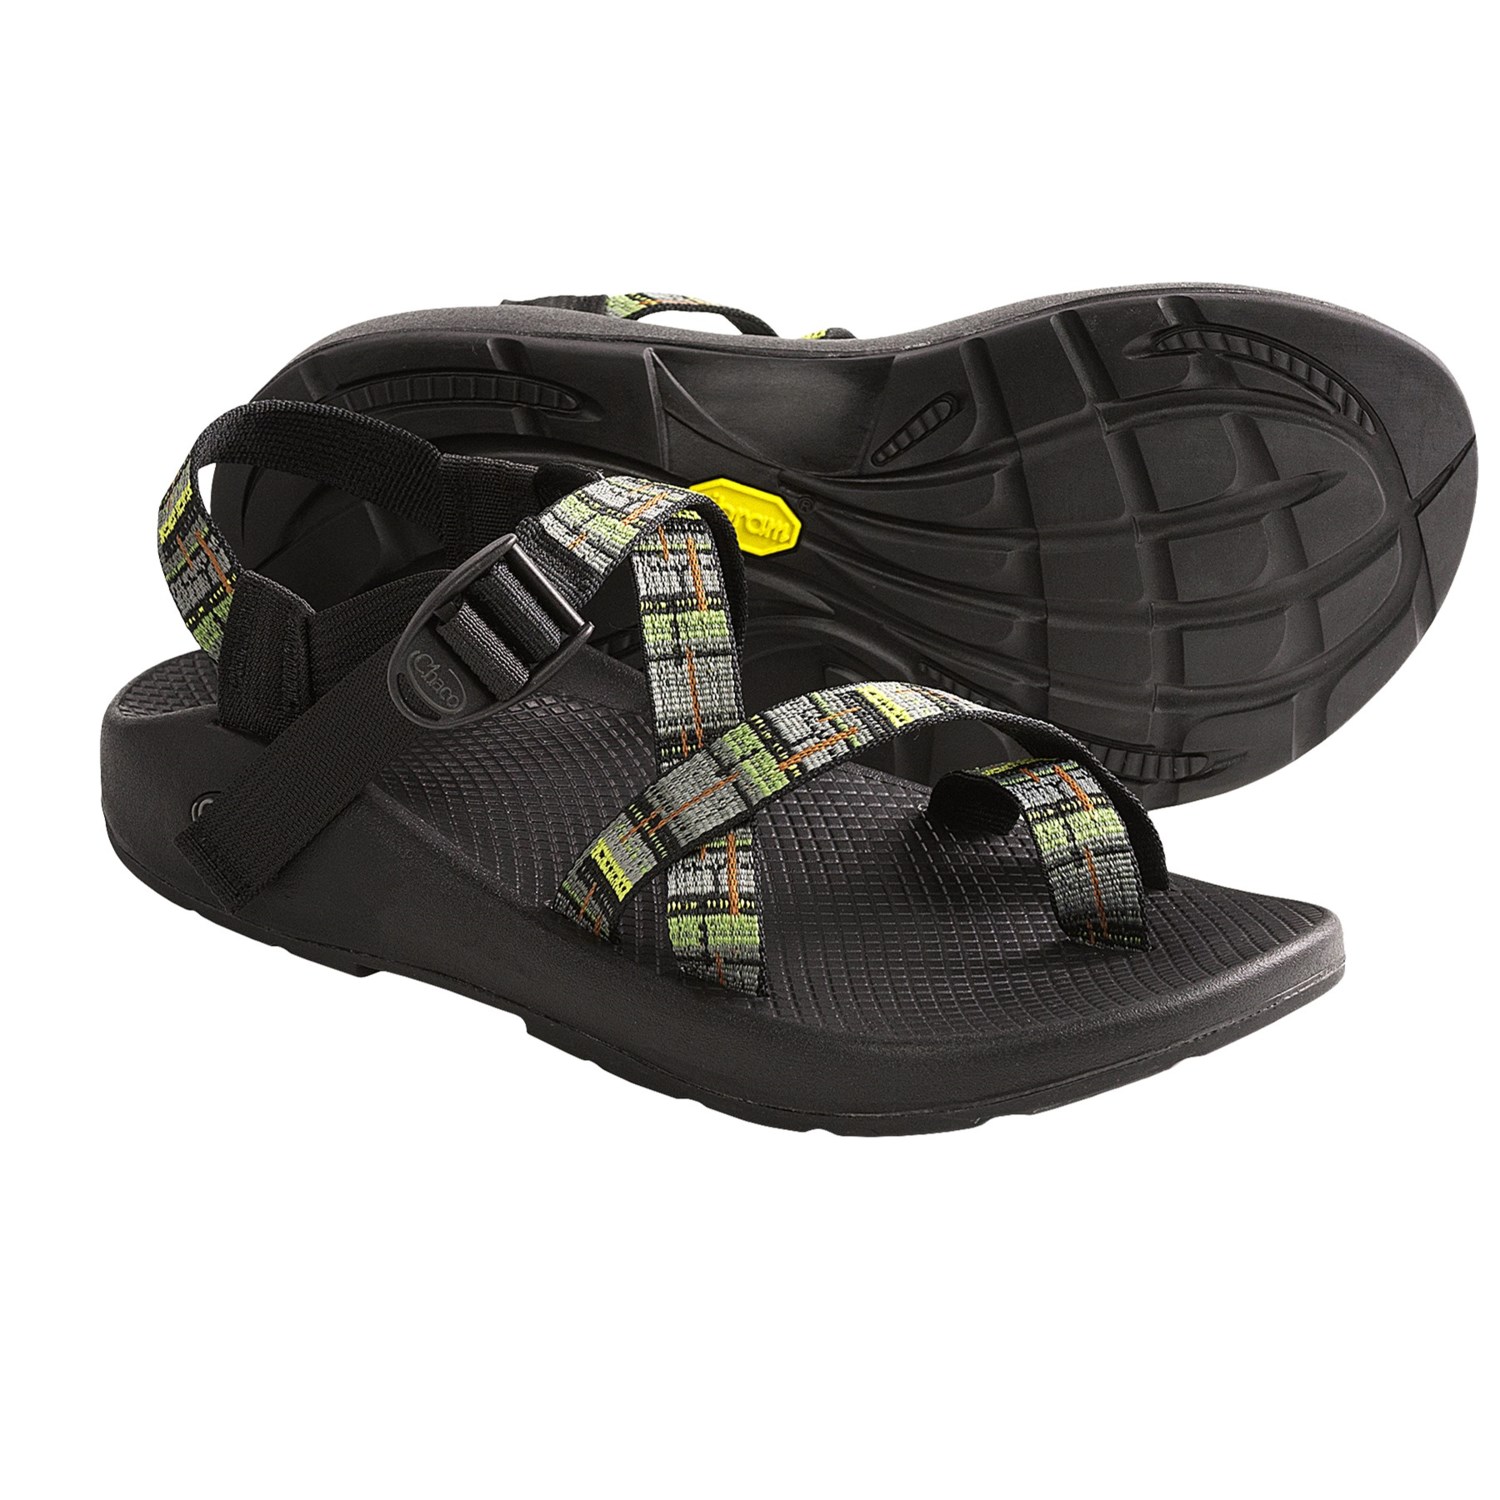 Chaco Z2 Pro Sport Sandals (For Men) in Thirteen